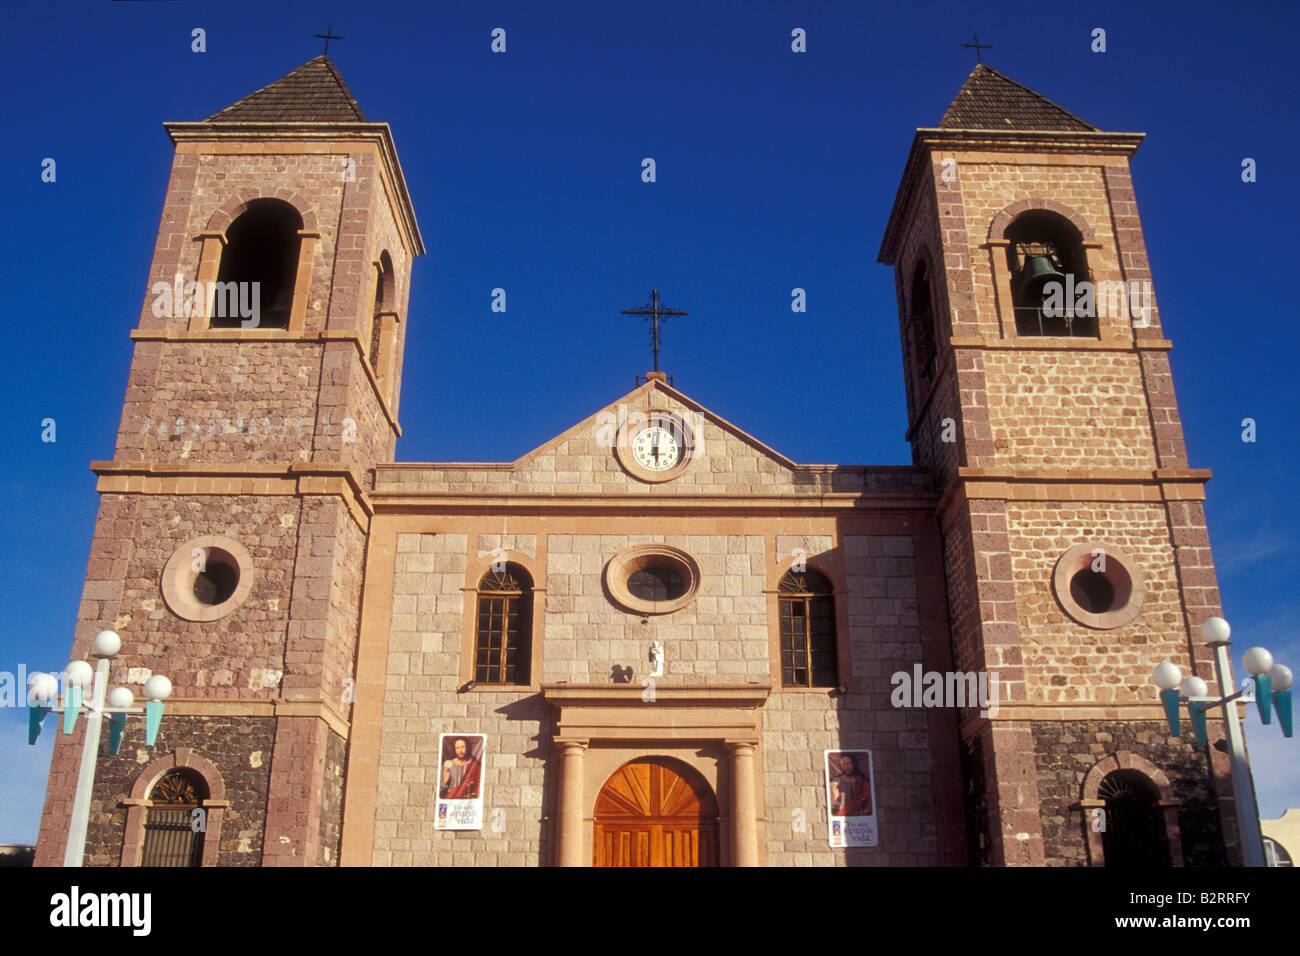 The Catedral de Nuestra Senora de la Paz cathedral in the city of La Paz, Baja California Sur, Mexico Stock Photo